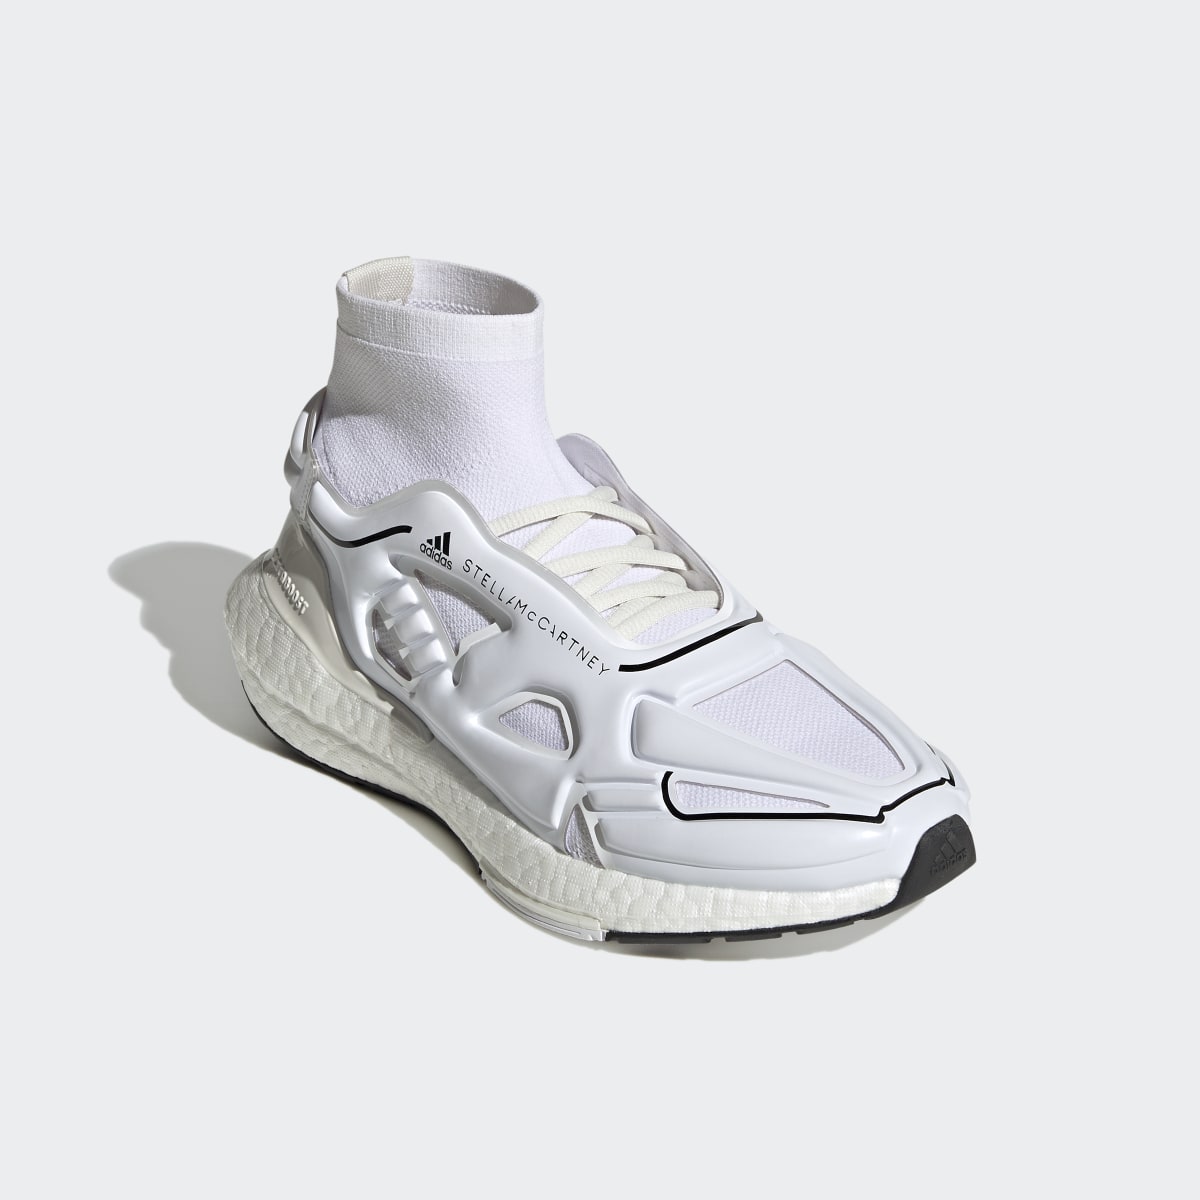 Adidas by Stella McCartney Ultraboost 22 shoes. 5